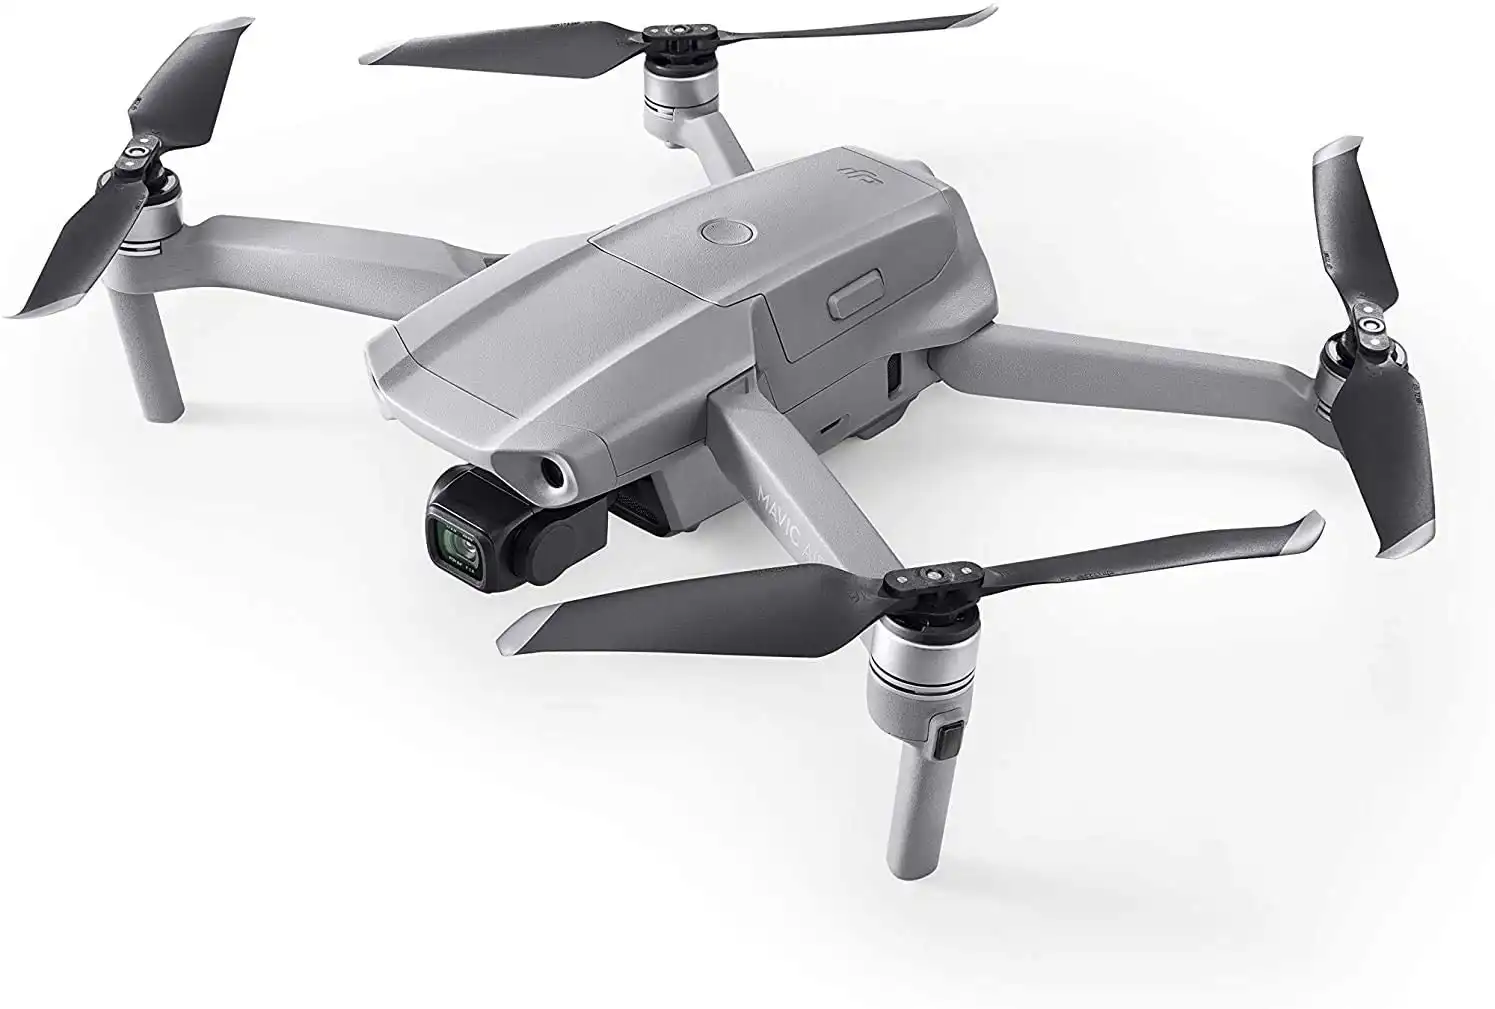 Altid Illusion Amfibiekøretøjer DJI Drone Tutorial: Best Camera Settings for Landscapes